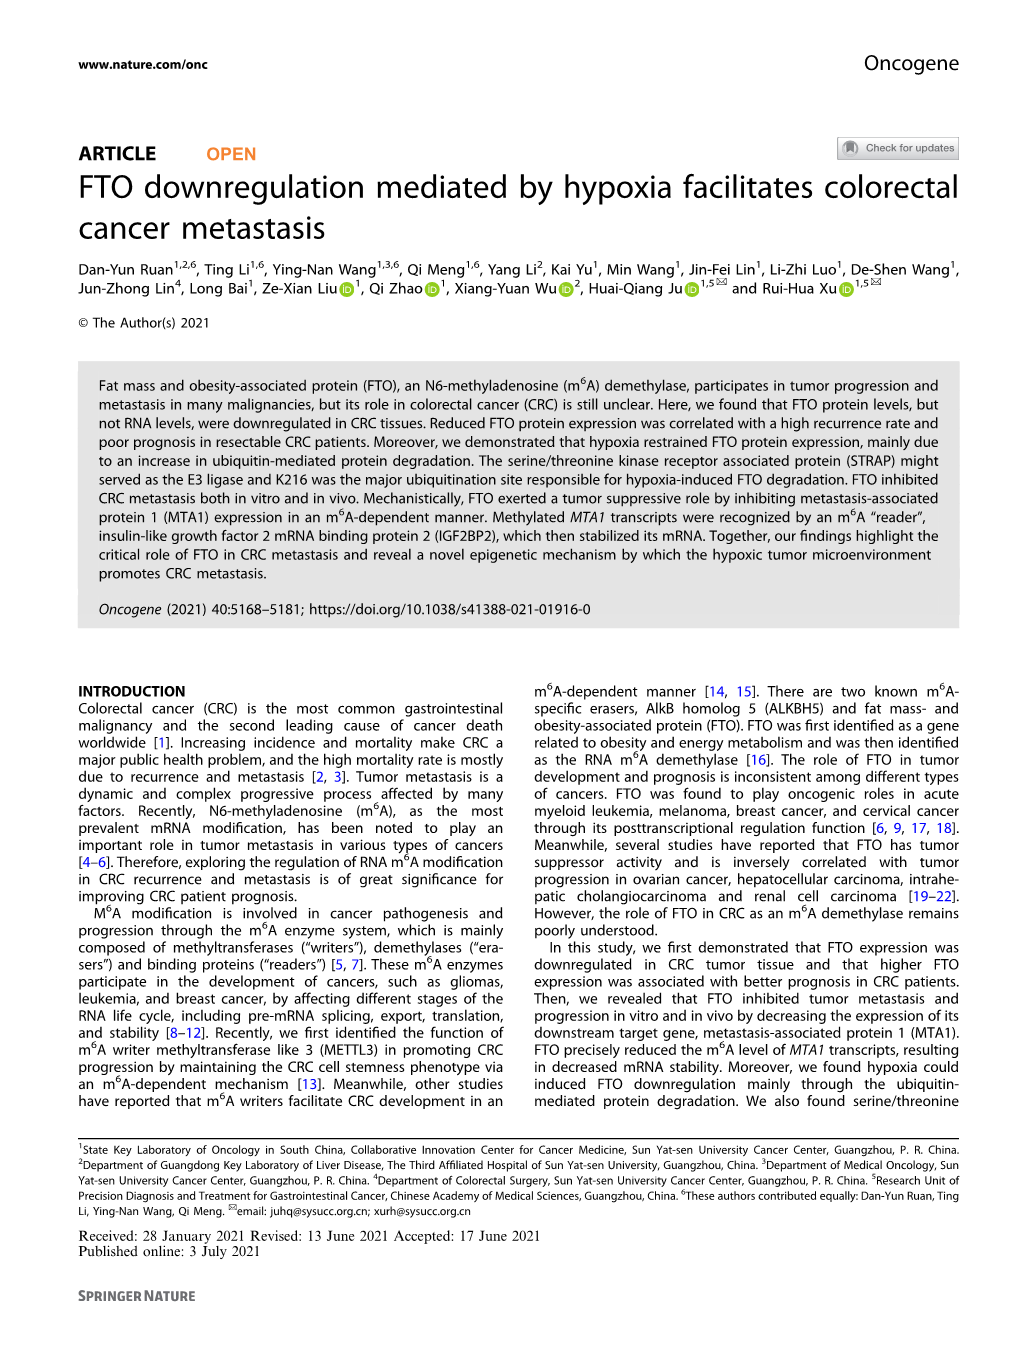 FTO Downregulation Mediated by Hypoxia Facilitates Colorectal Cancer Metastasis